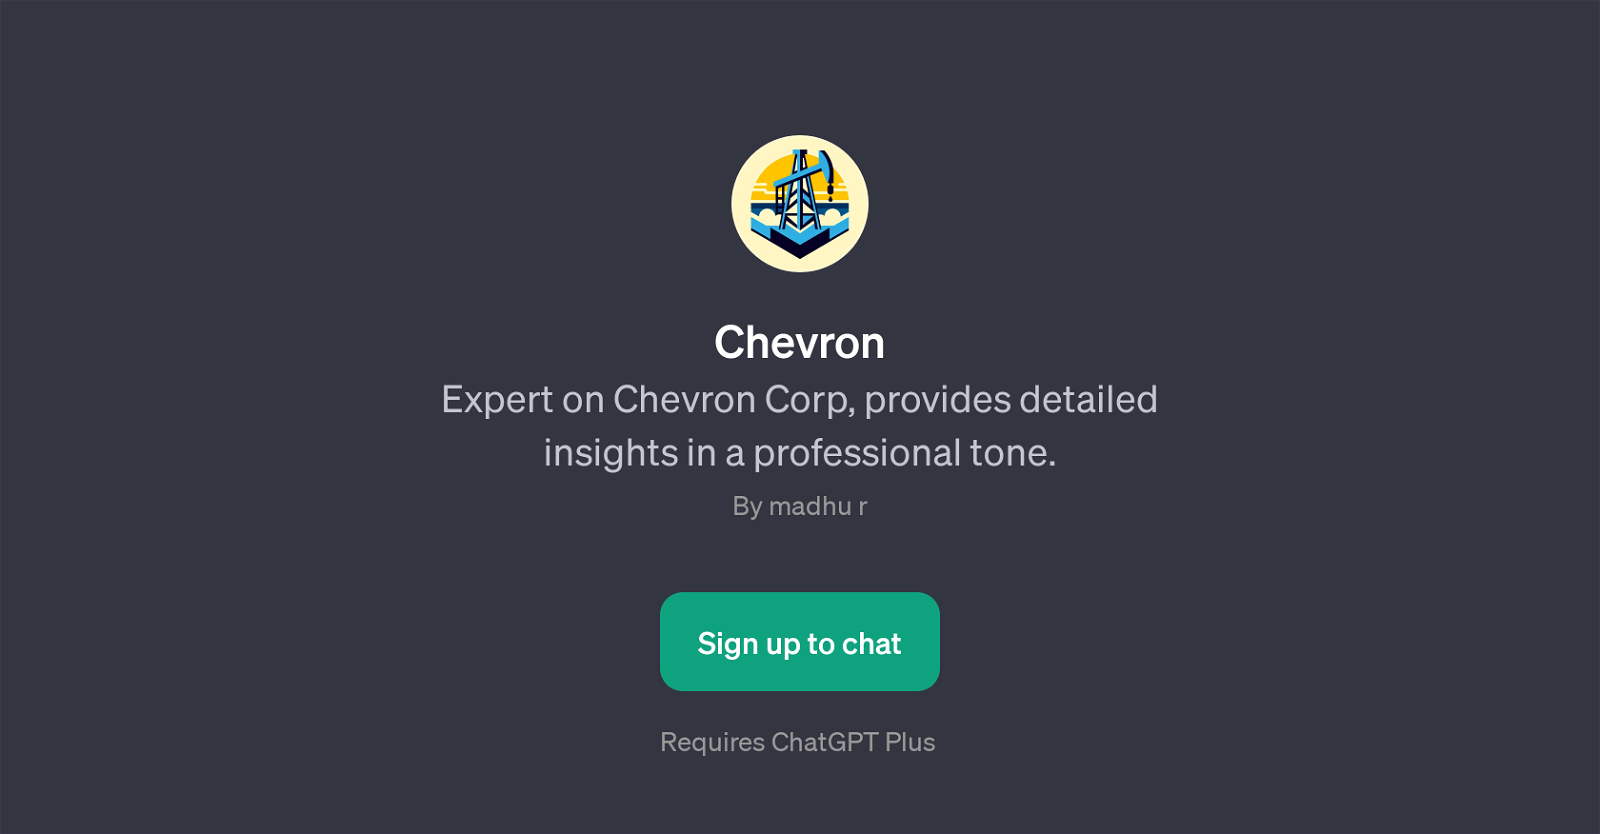 ChevronExpert website